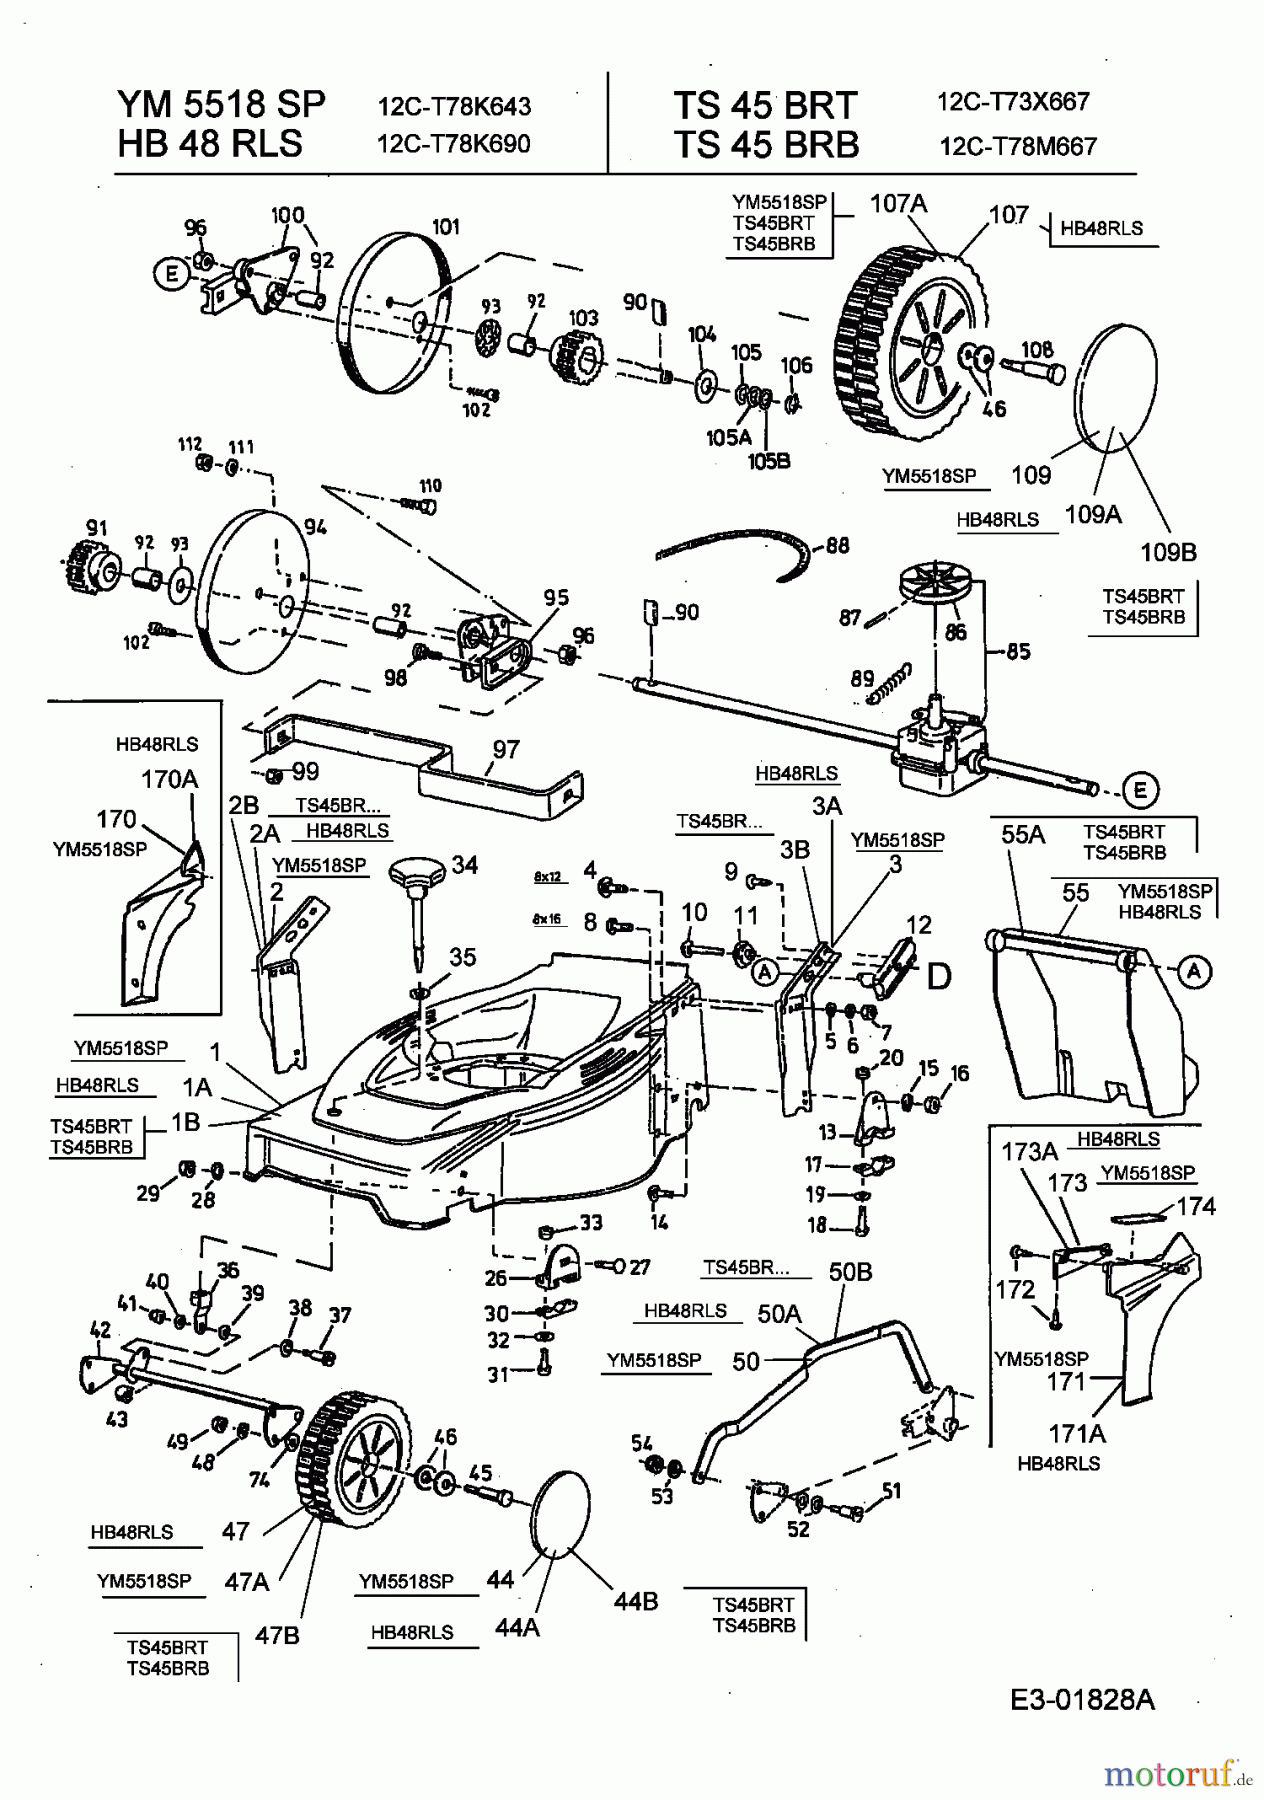  Turbo Silent Petrol mower self propelled TS 45 BR-B 12C-T78M667  (2003) Gearbox, Wheels, Cutting hight adjustment